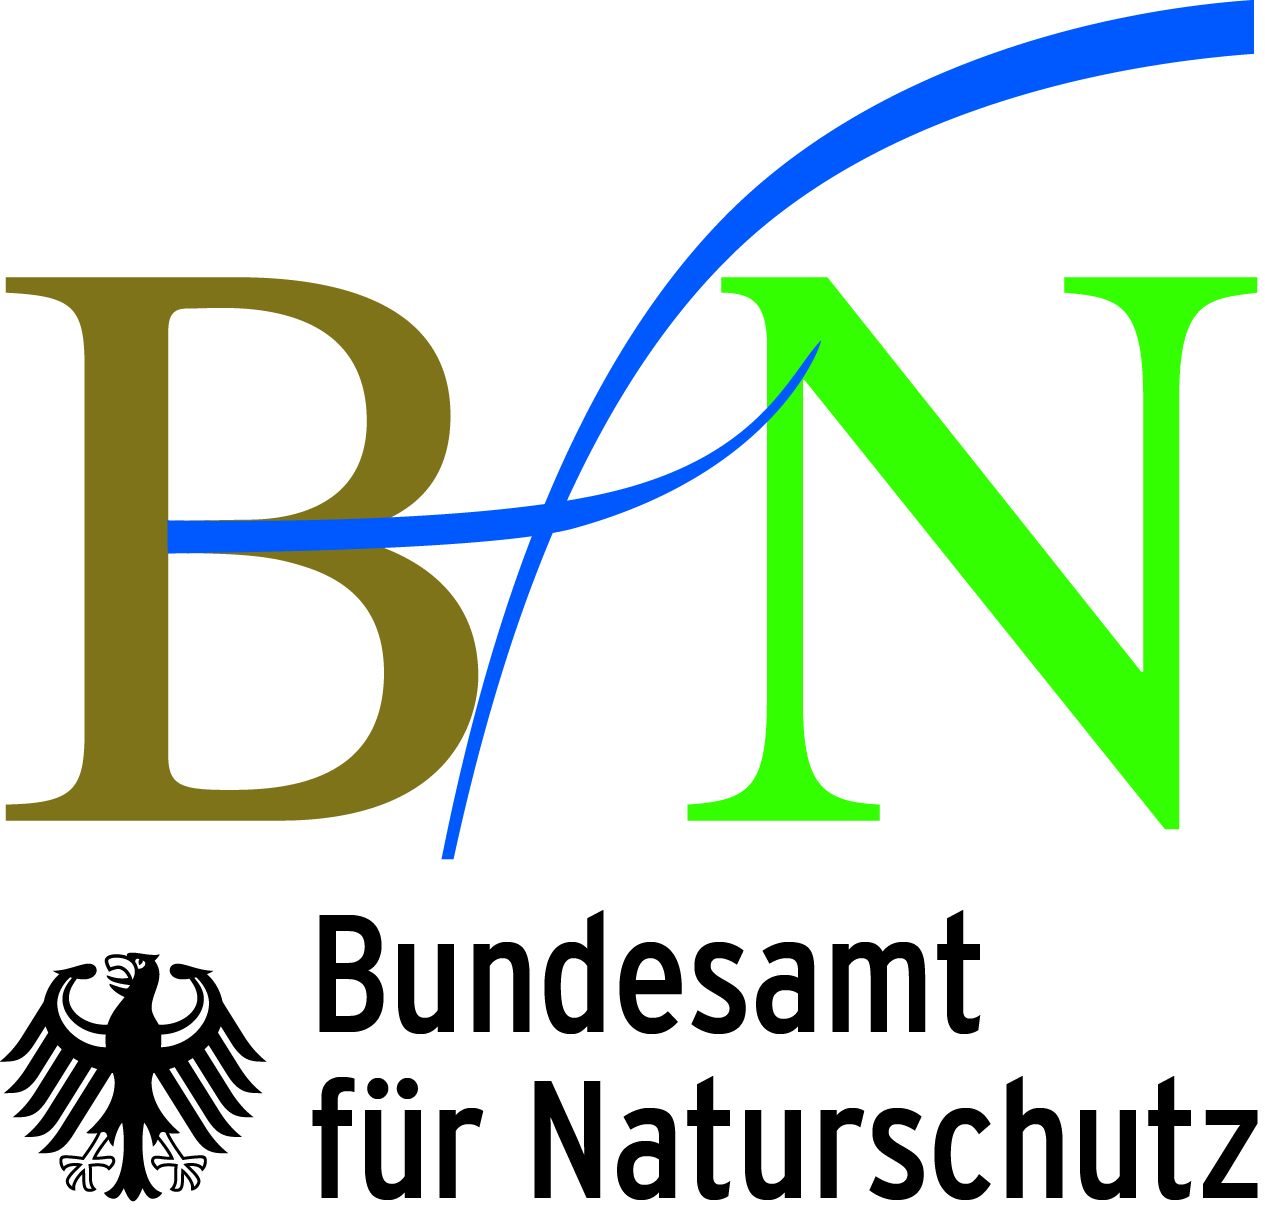 RZ Logo BfN 2014 4C